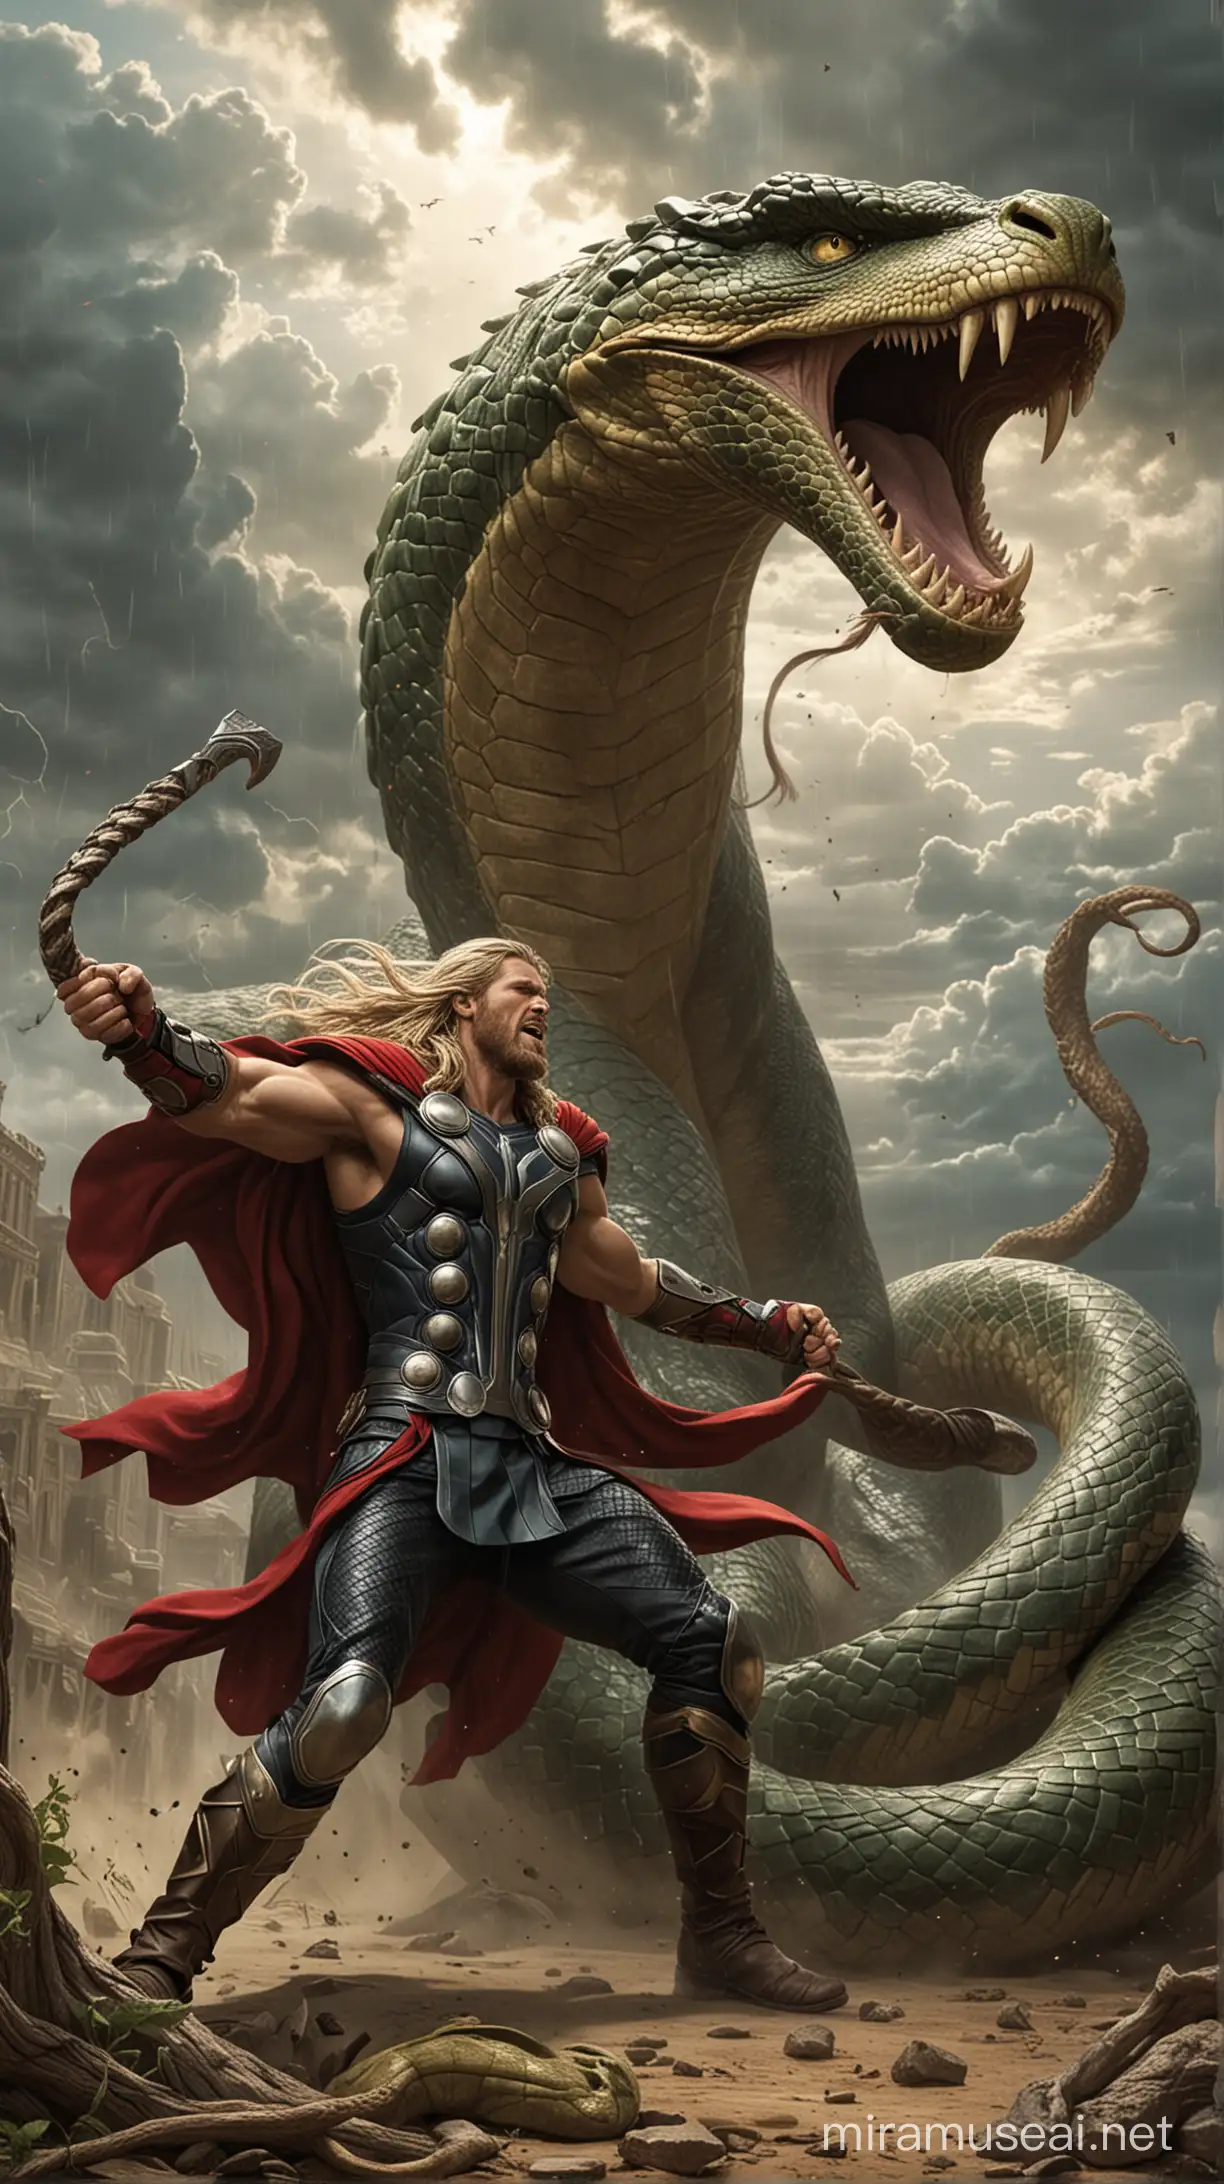 Thor defeats a giant snake